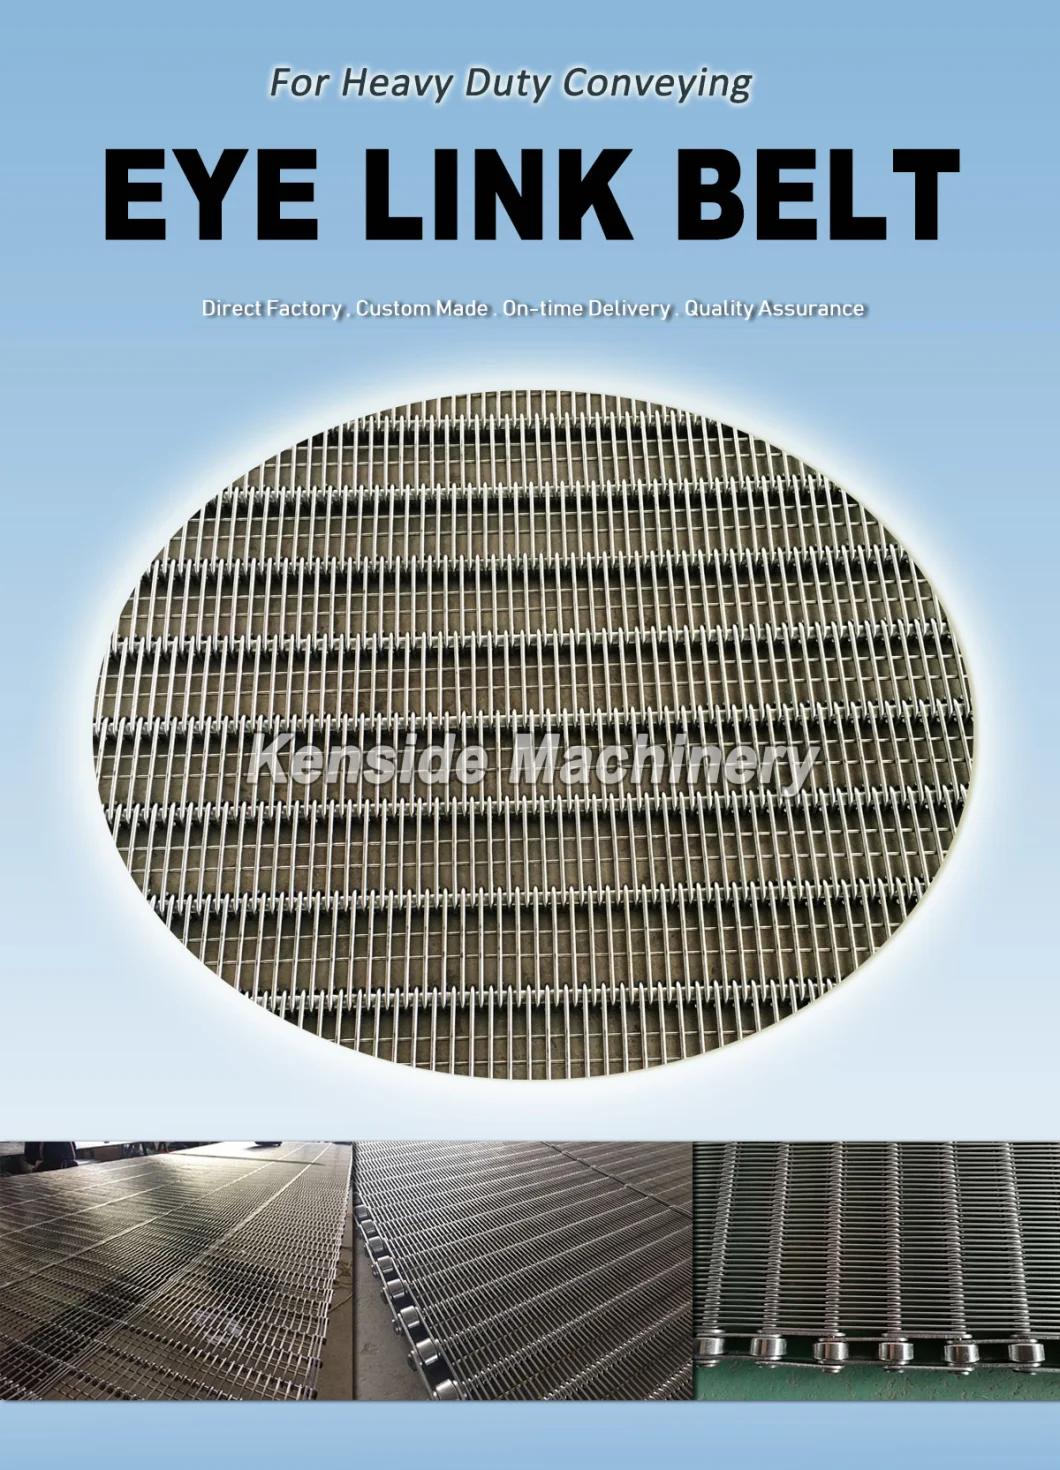 Eyelink Belts